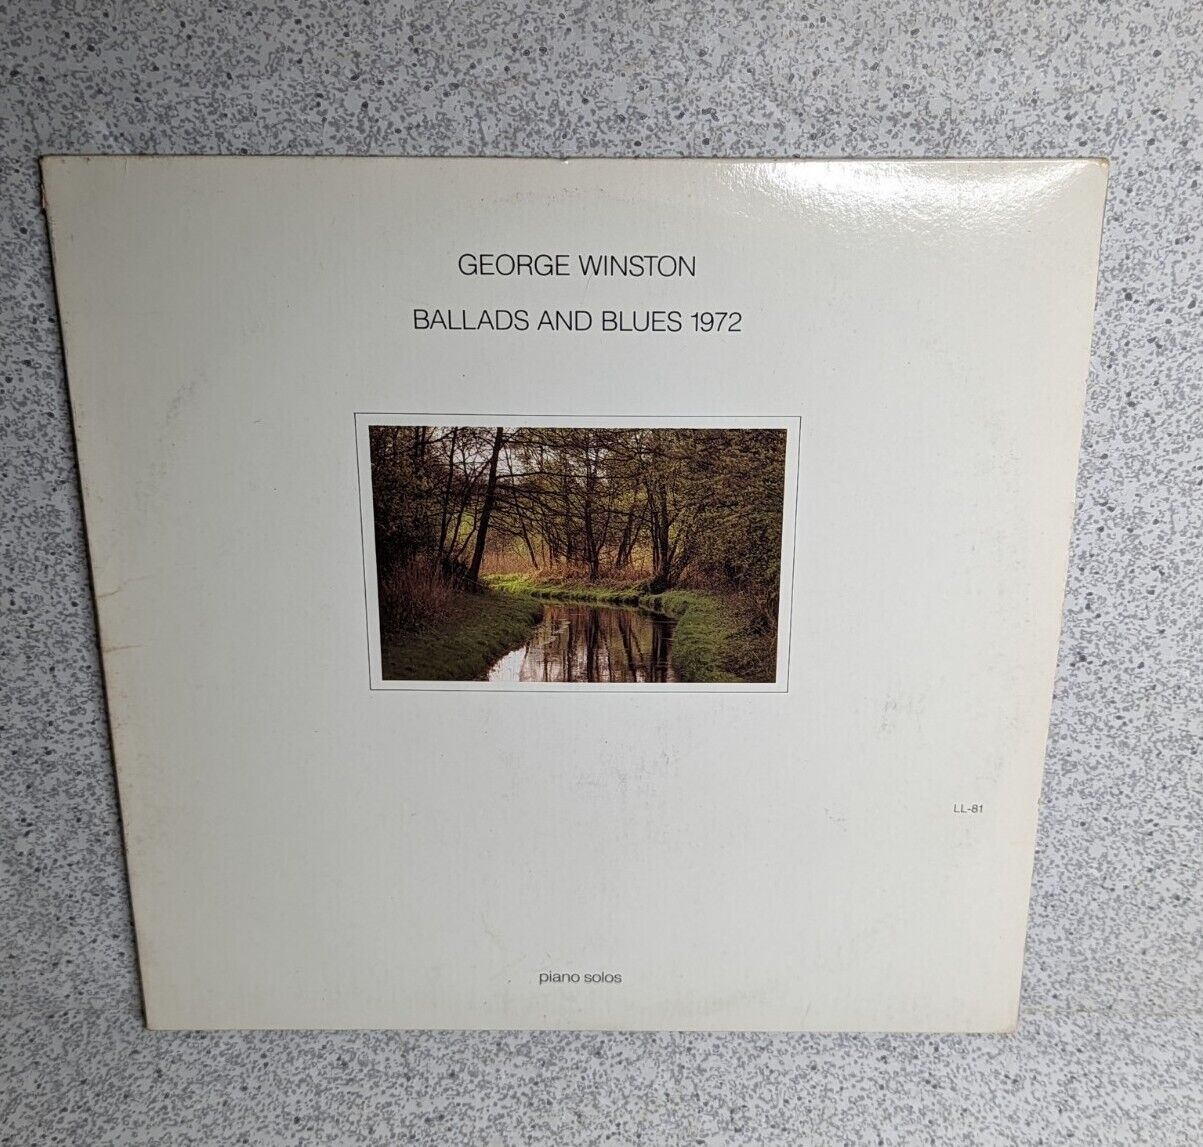 George Winston Ballads and Blues 1972 1981 LP Vinyl